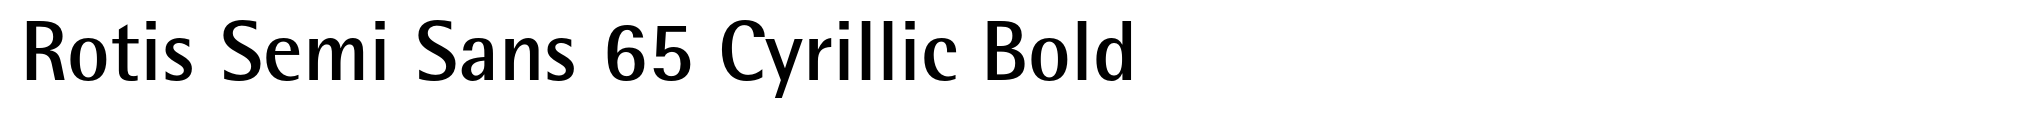 Rotis Semi Sans 65 Cyrillic Bold image